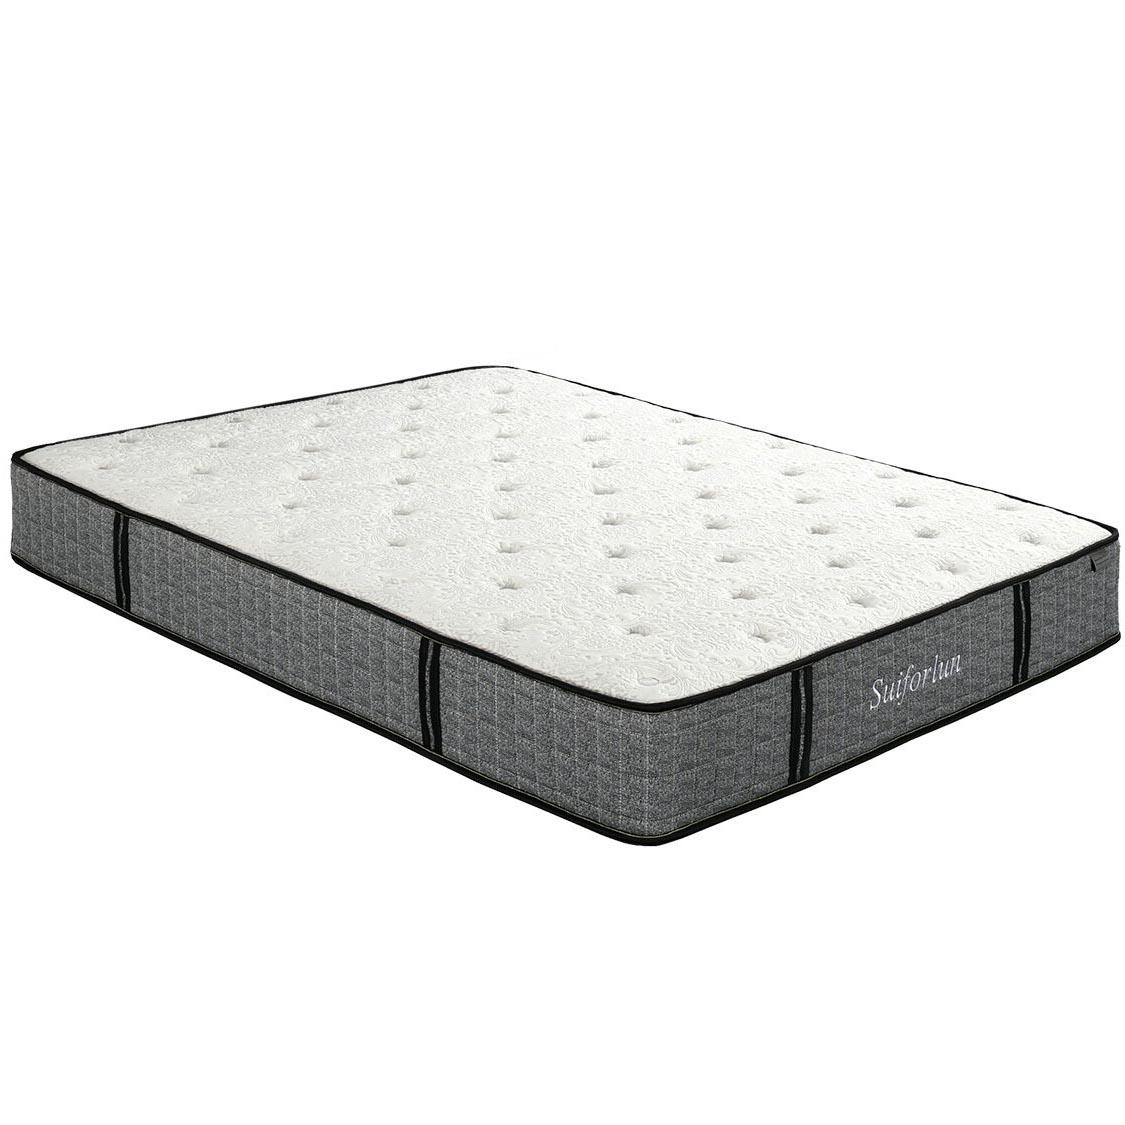 Suiforlun mattress stable gel hybrid mattress series for home-2